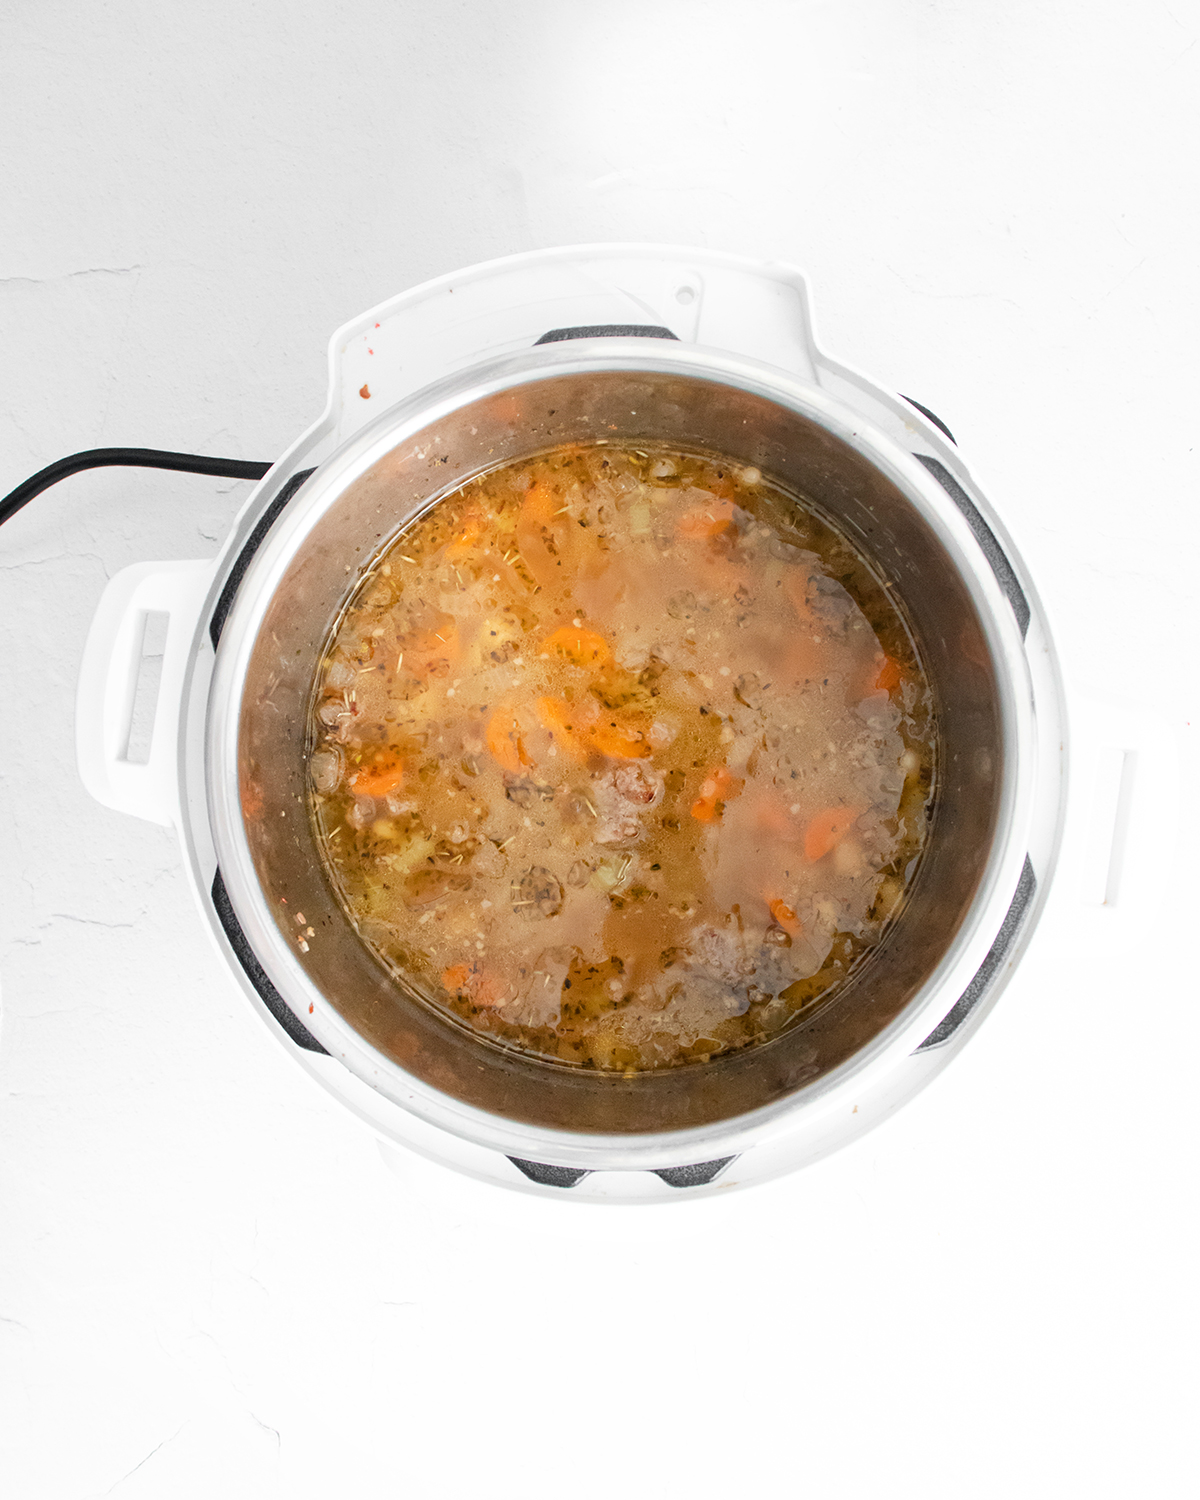 Instant Pot Sausage White Bean Soup